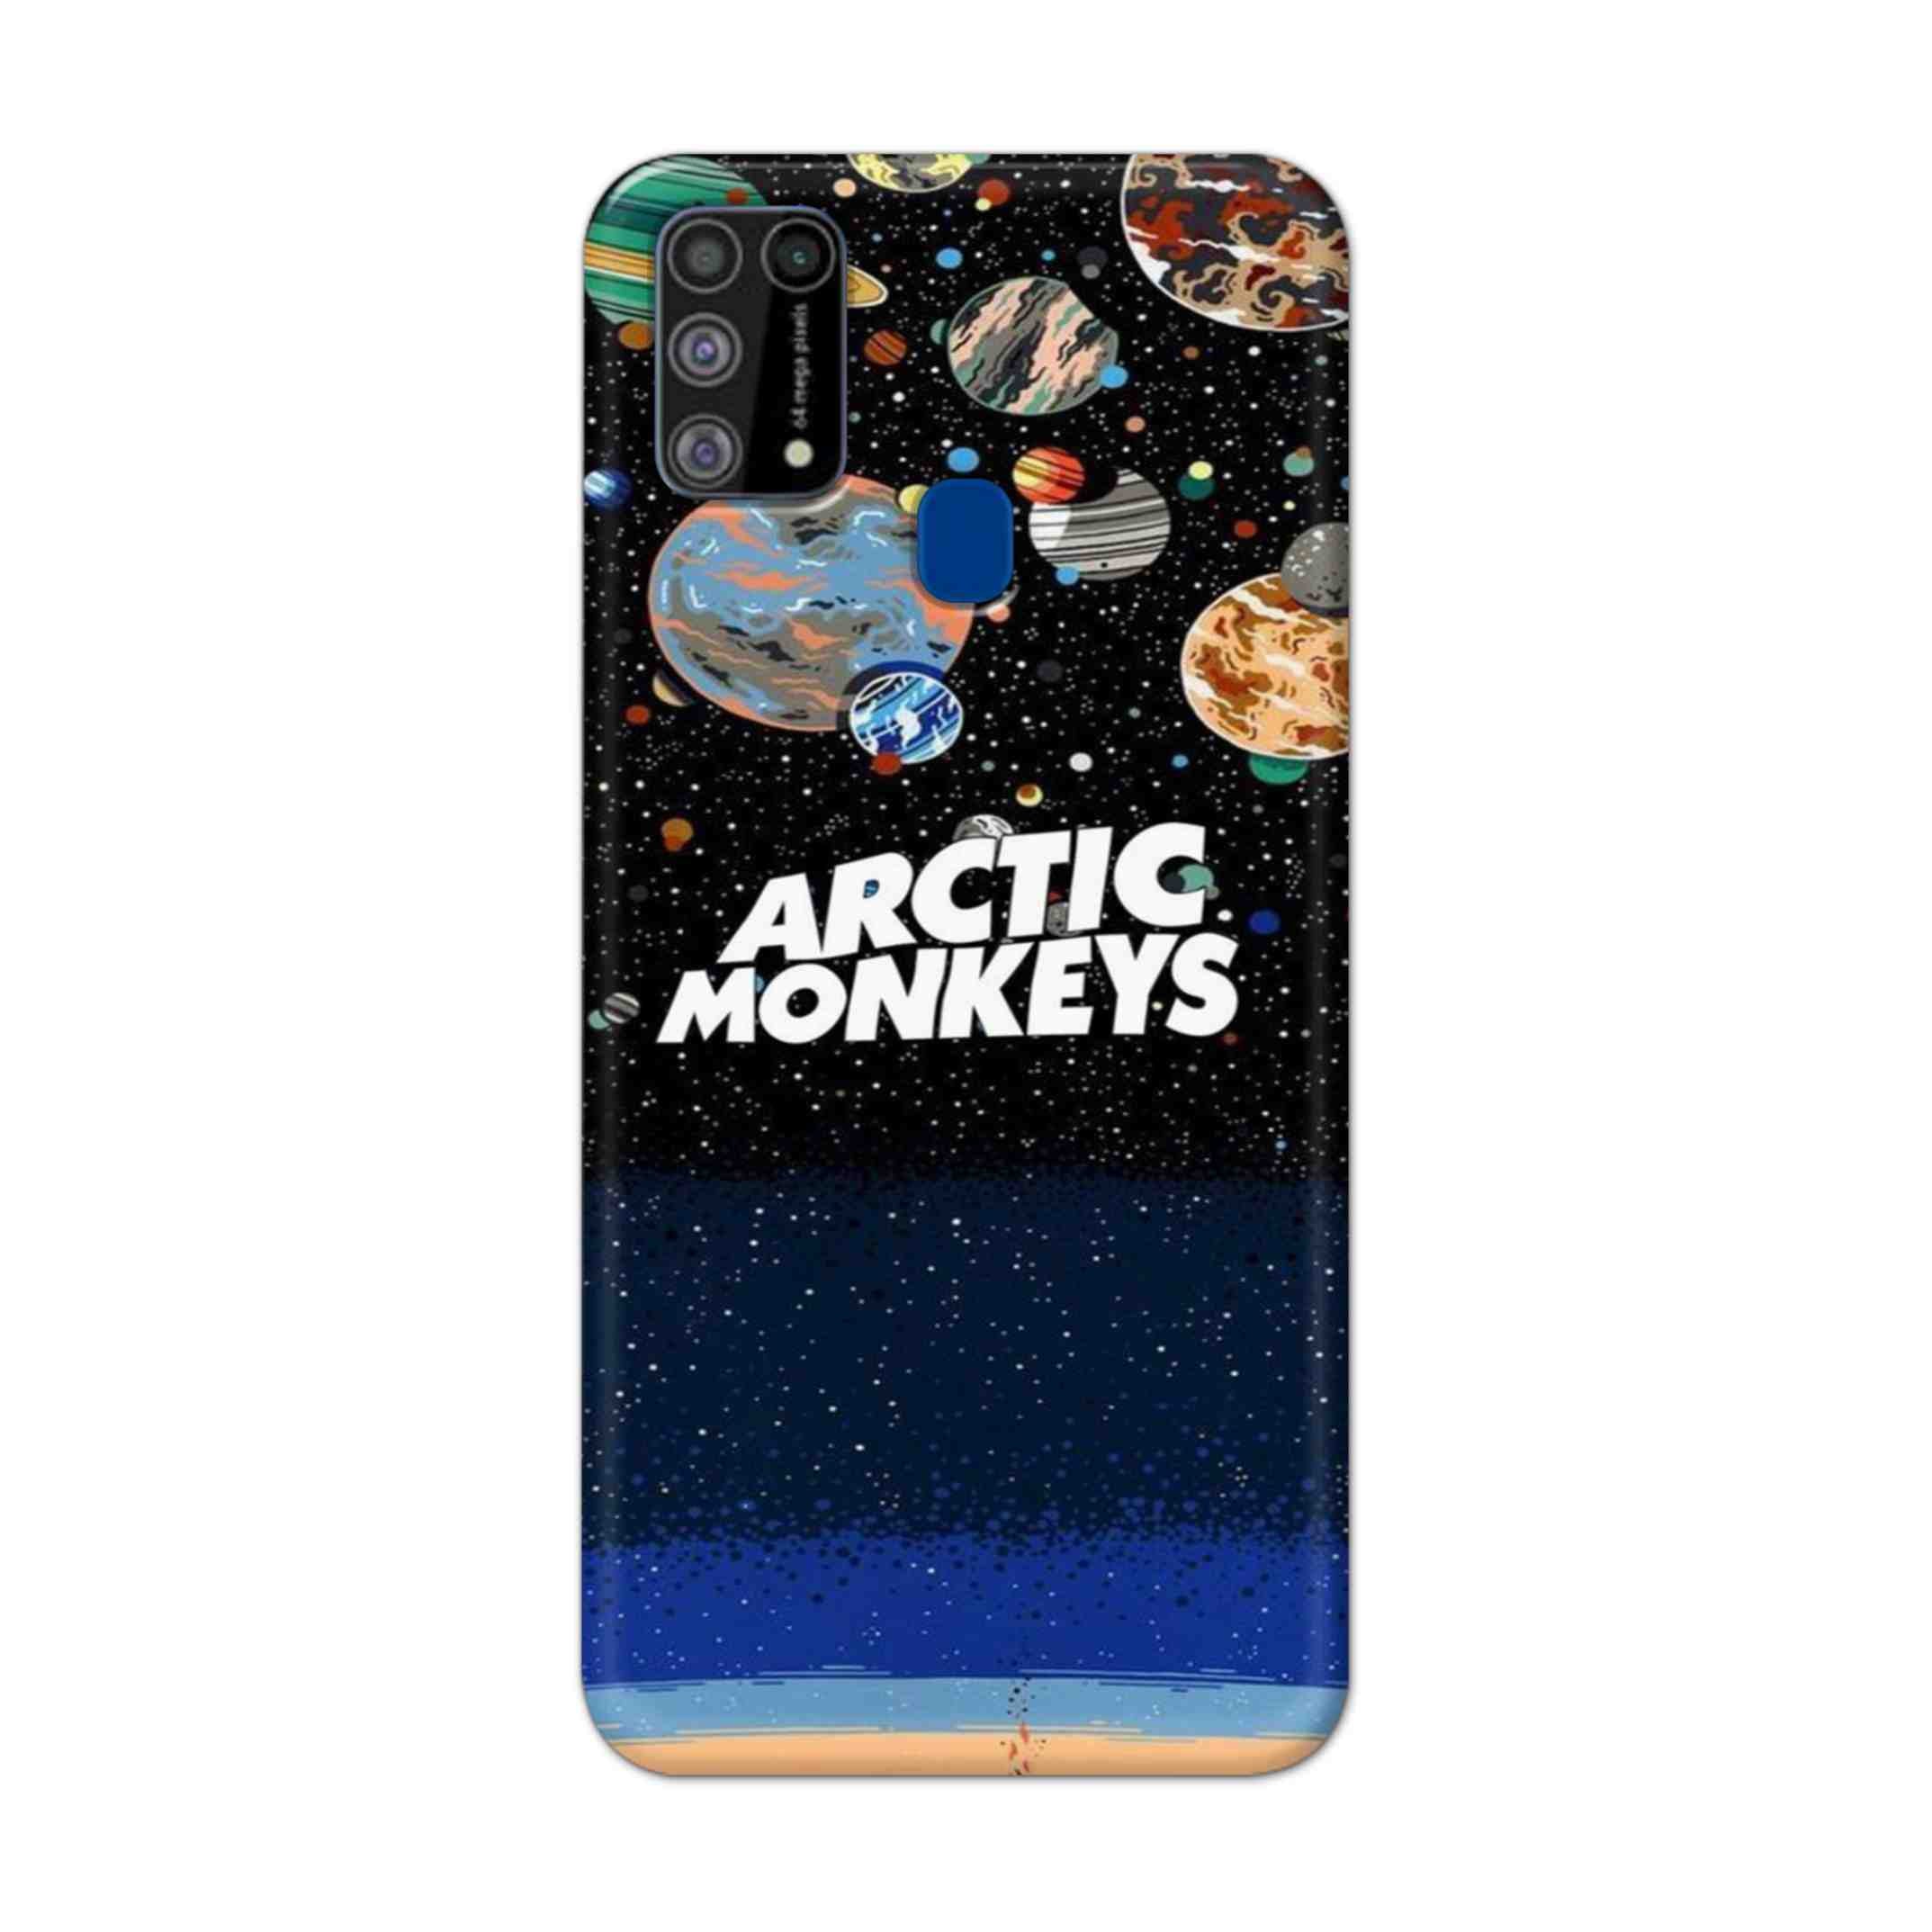 Buy Artic Monkeys Hard Back Mobile Phone Case Cover For Samsung Galaxy M31 Online